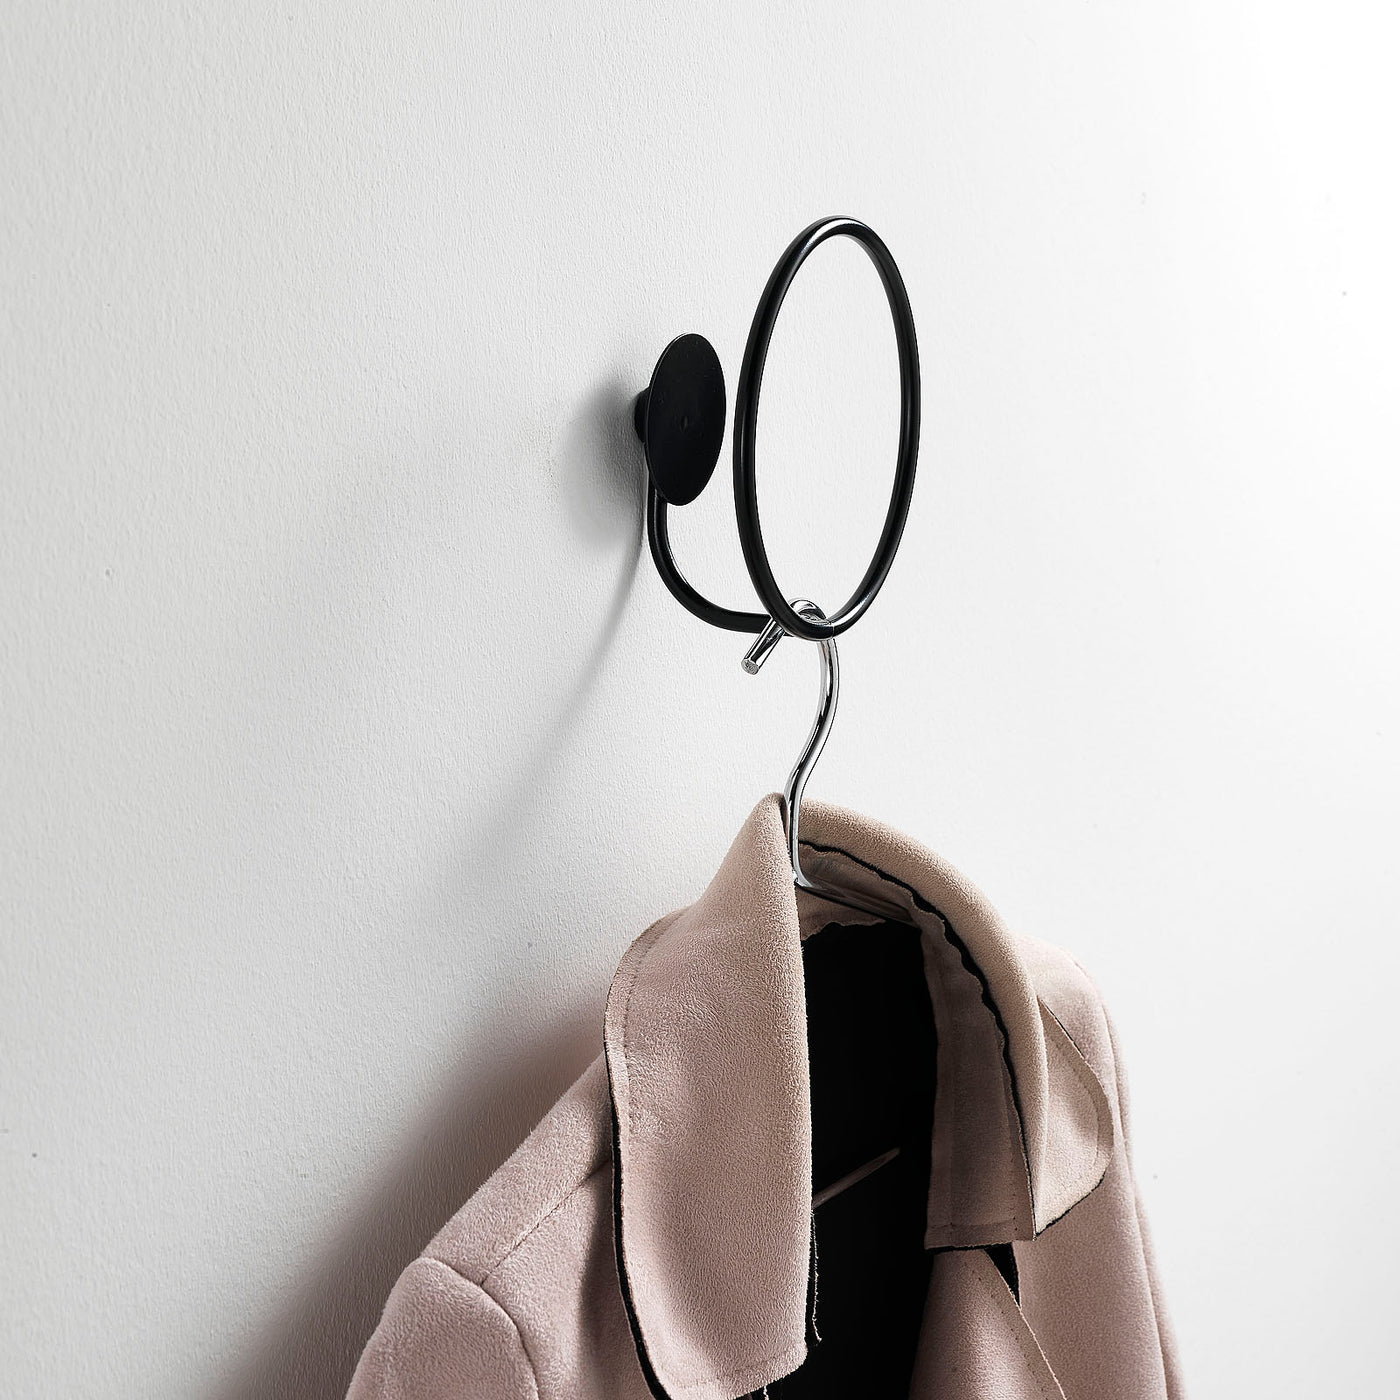 TITIK black coat hanger